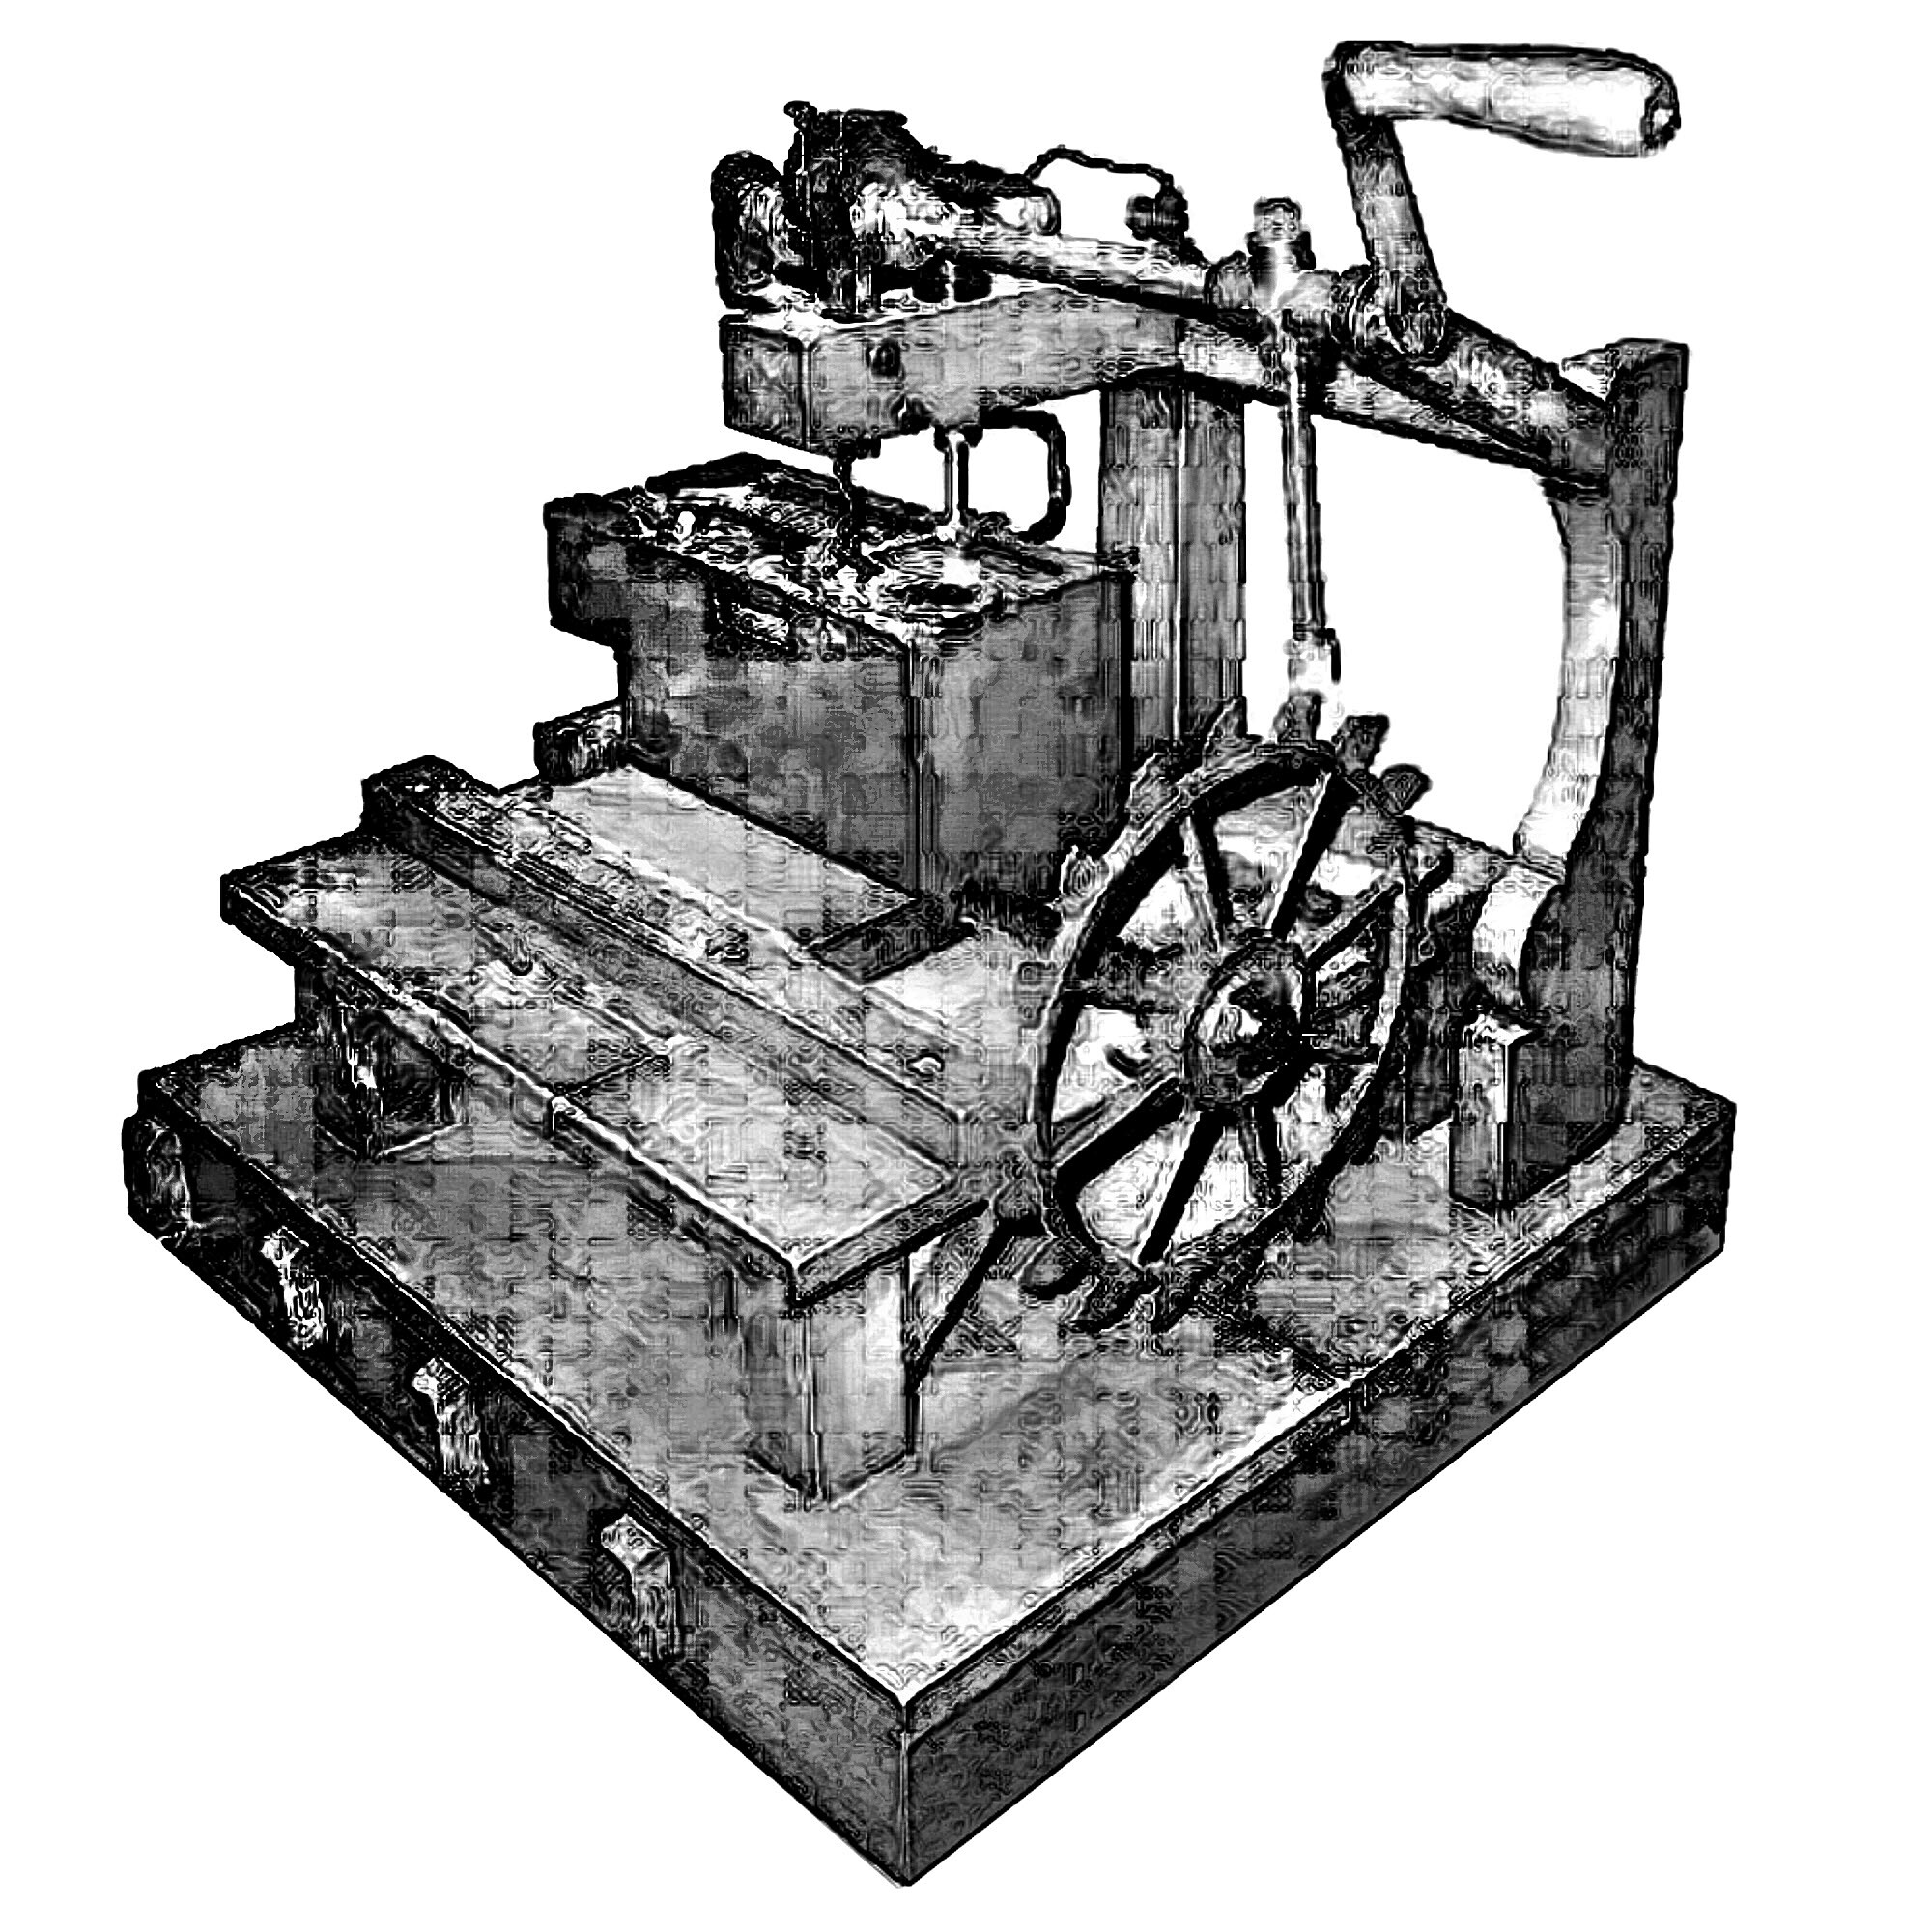 Thomas Saint's machine.